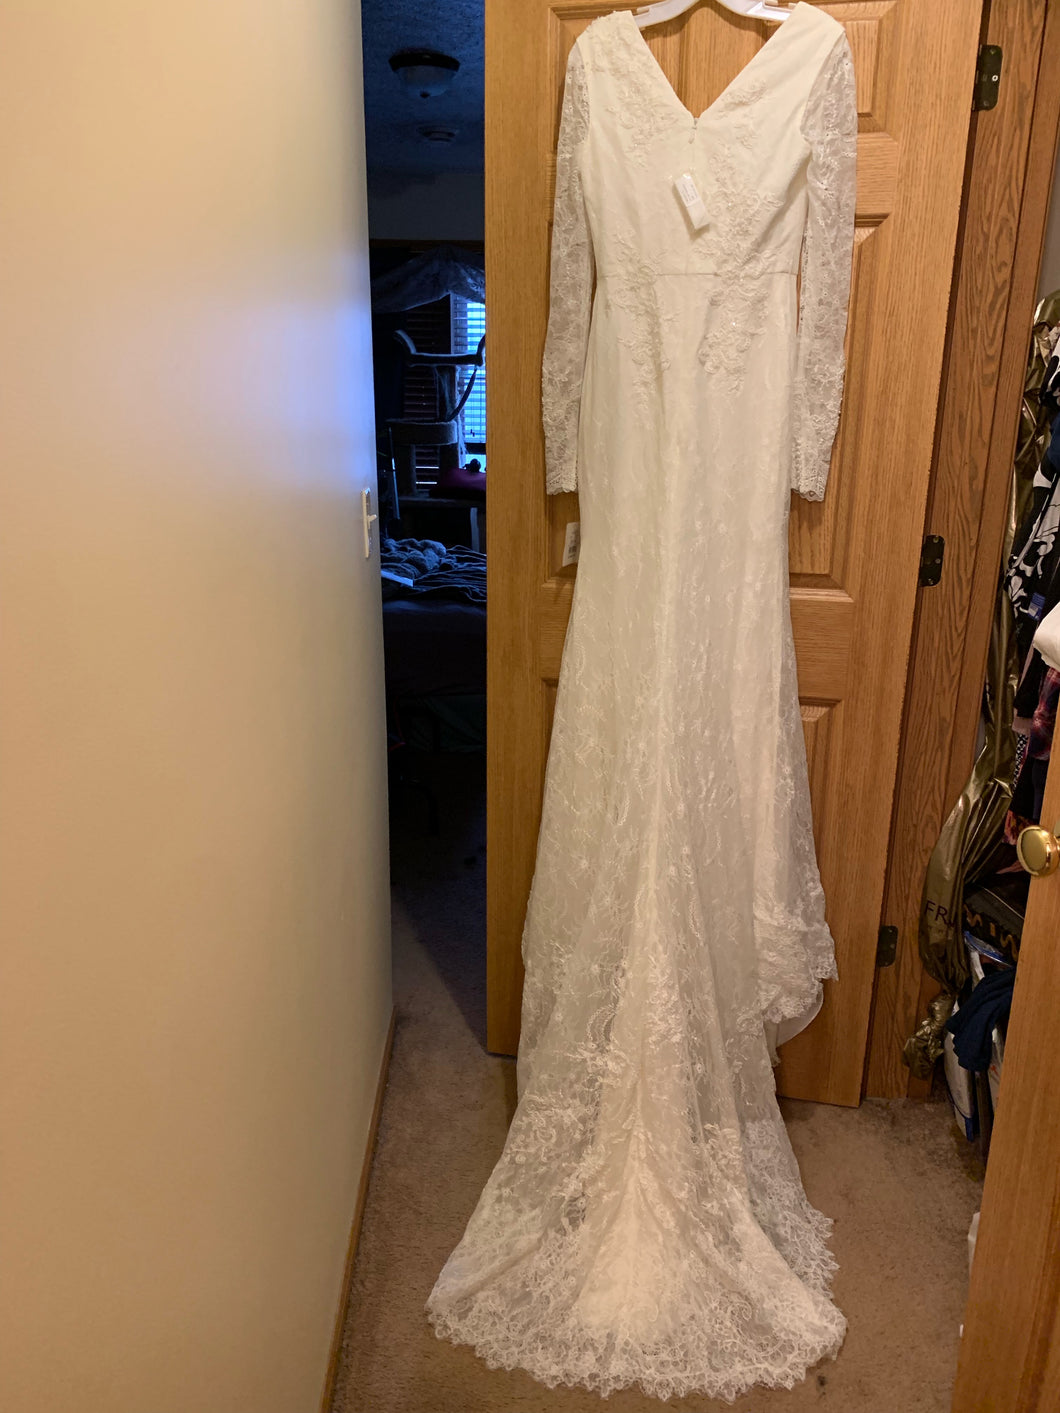 Vera Wang White 'Long Sleeve Lace Sheath' size 6 sample wedding dress back view on hanger